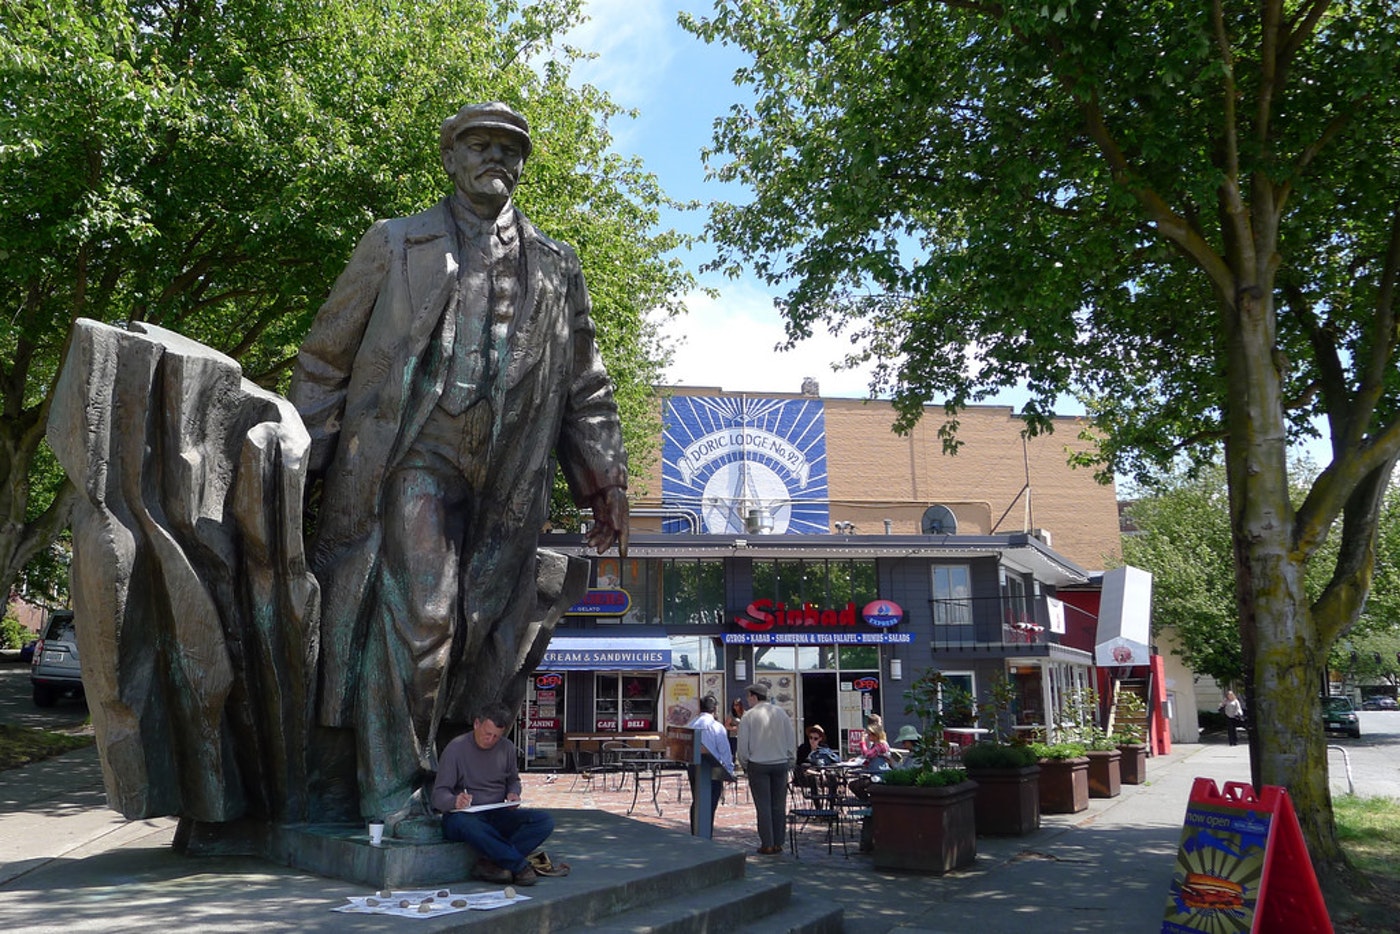 The statue of Vladimir Lenin in Seattle's Fremont neighborhood. CREDIT: FLICKR PHOTO/MARTIN DEUTSCH